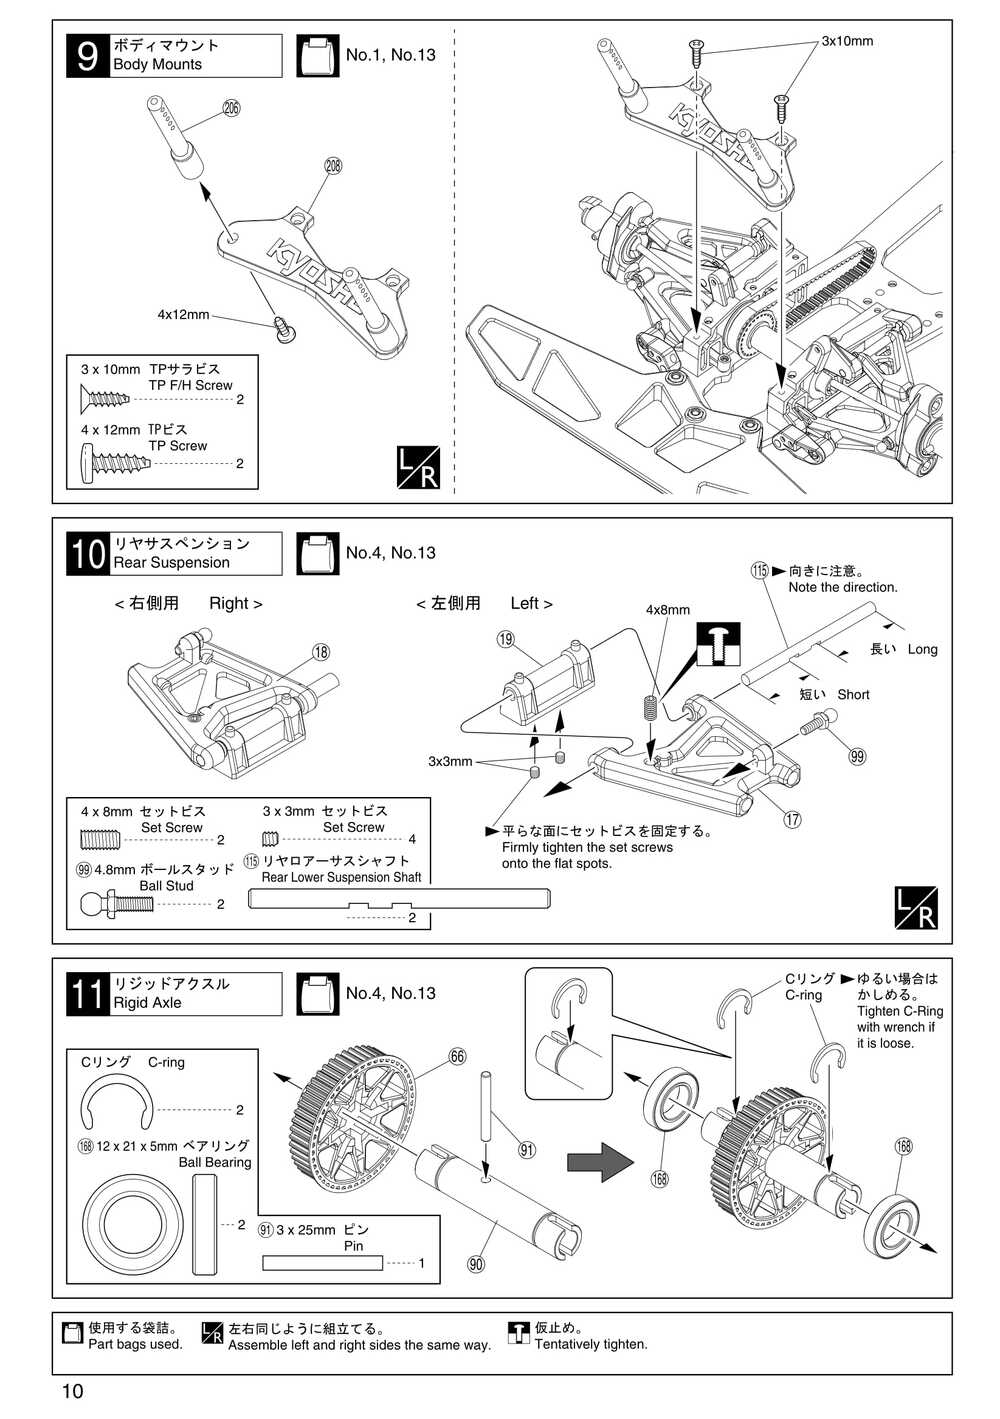 Kyosho - 31041 - Fantom Sports - Manual - Page 10